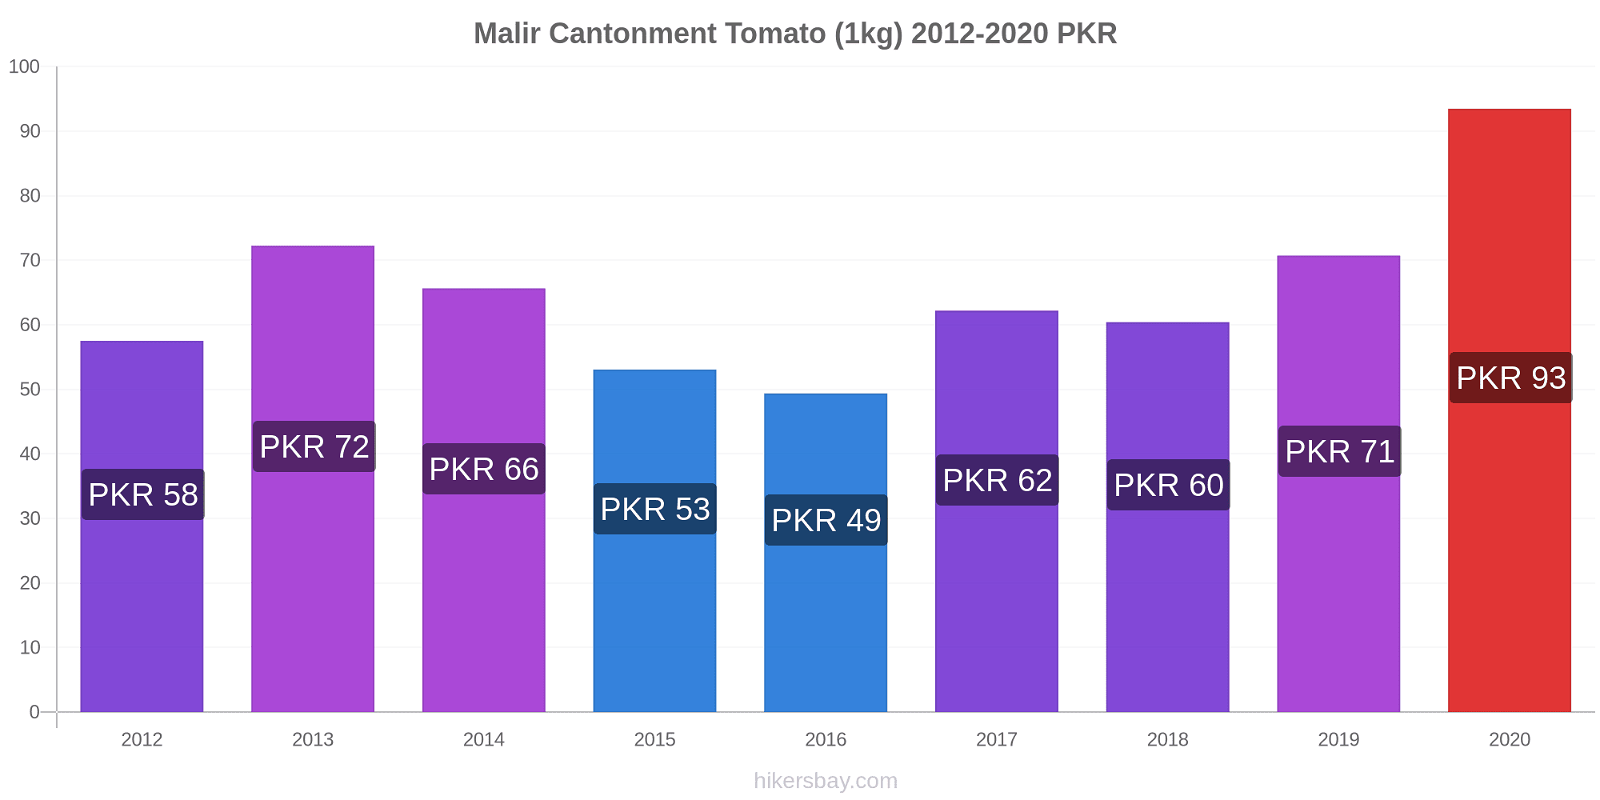 Malir Cantonment price changes Tomato (1kg) hikersbay.com